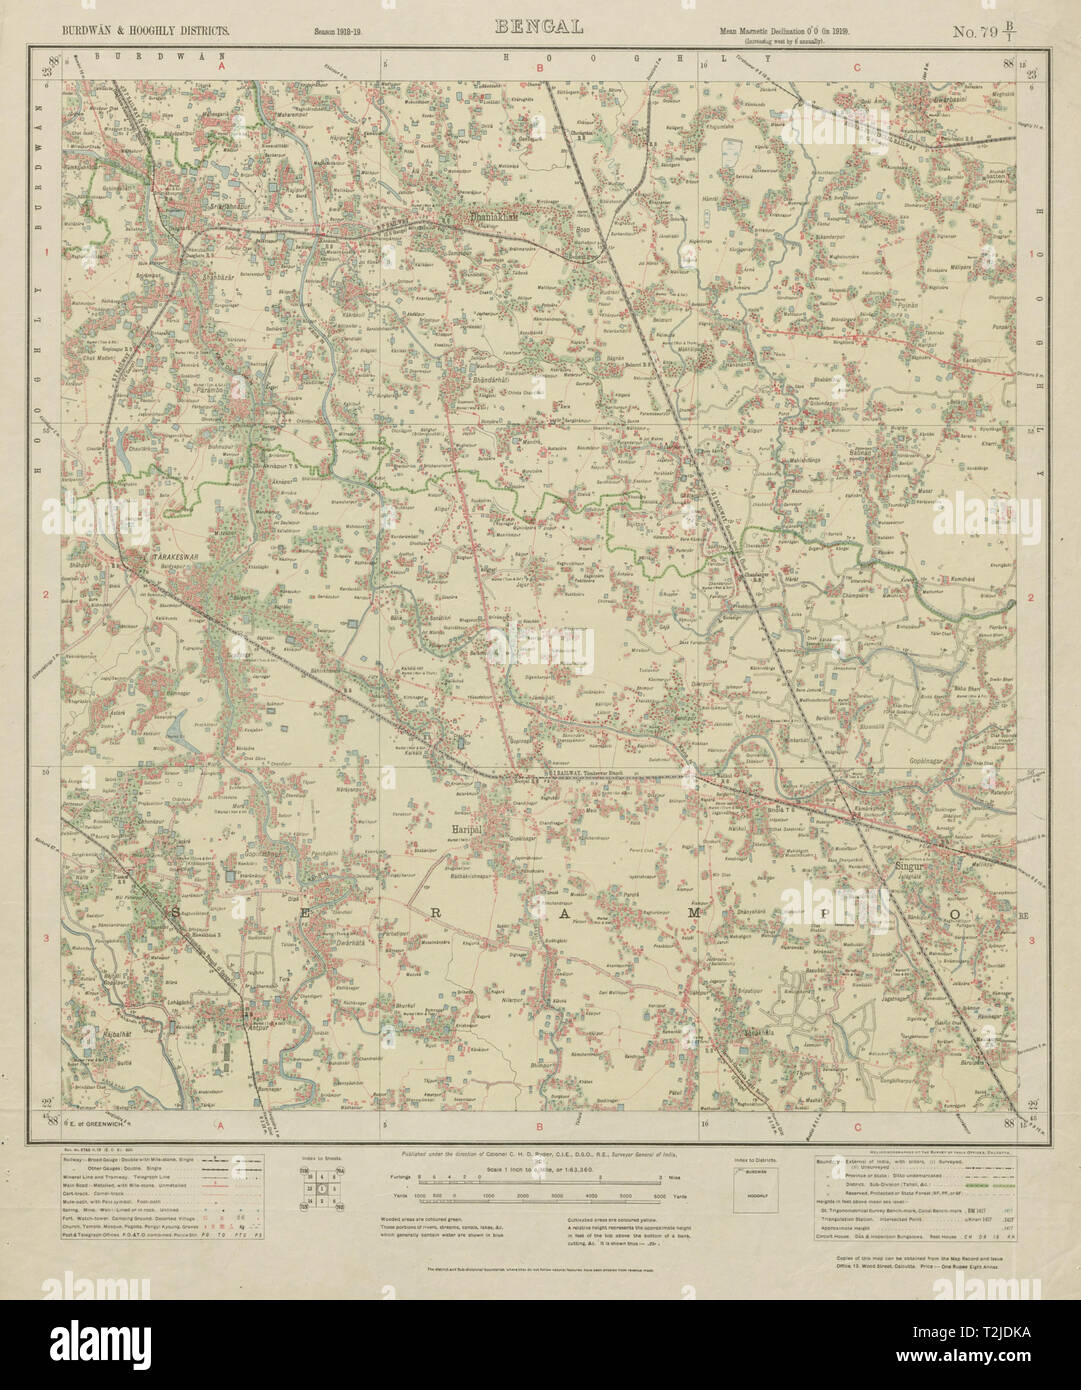 SURVEY OF INDIA 79 B/1 West Bengal Singur Haripal Dhaniakhali 1921 old map Stock Photo